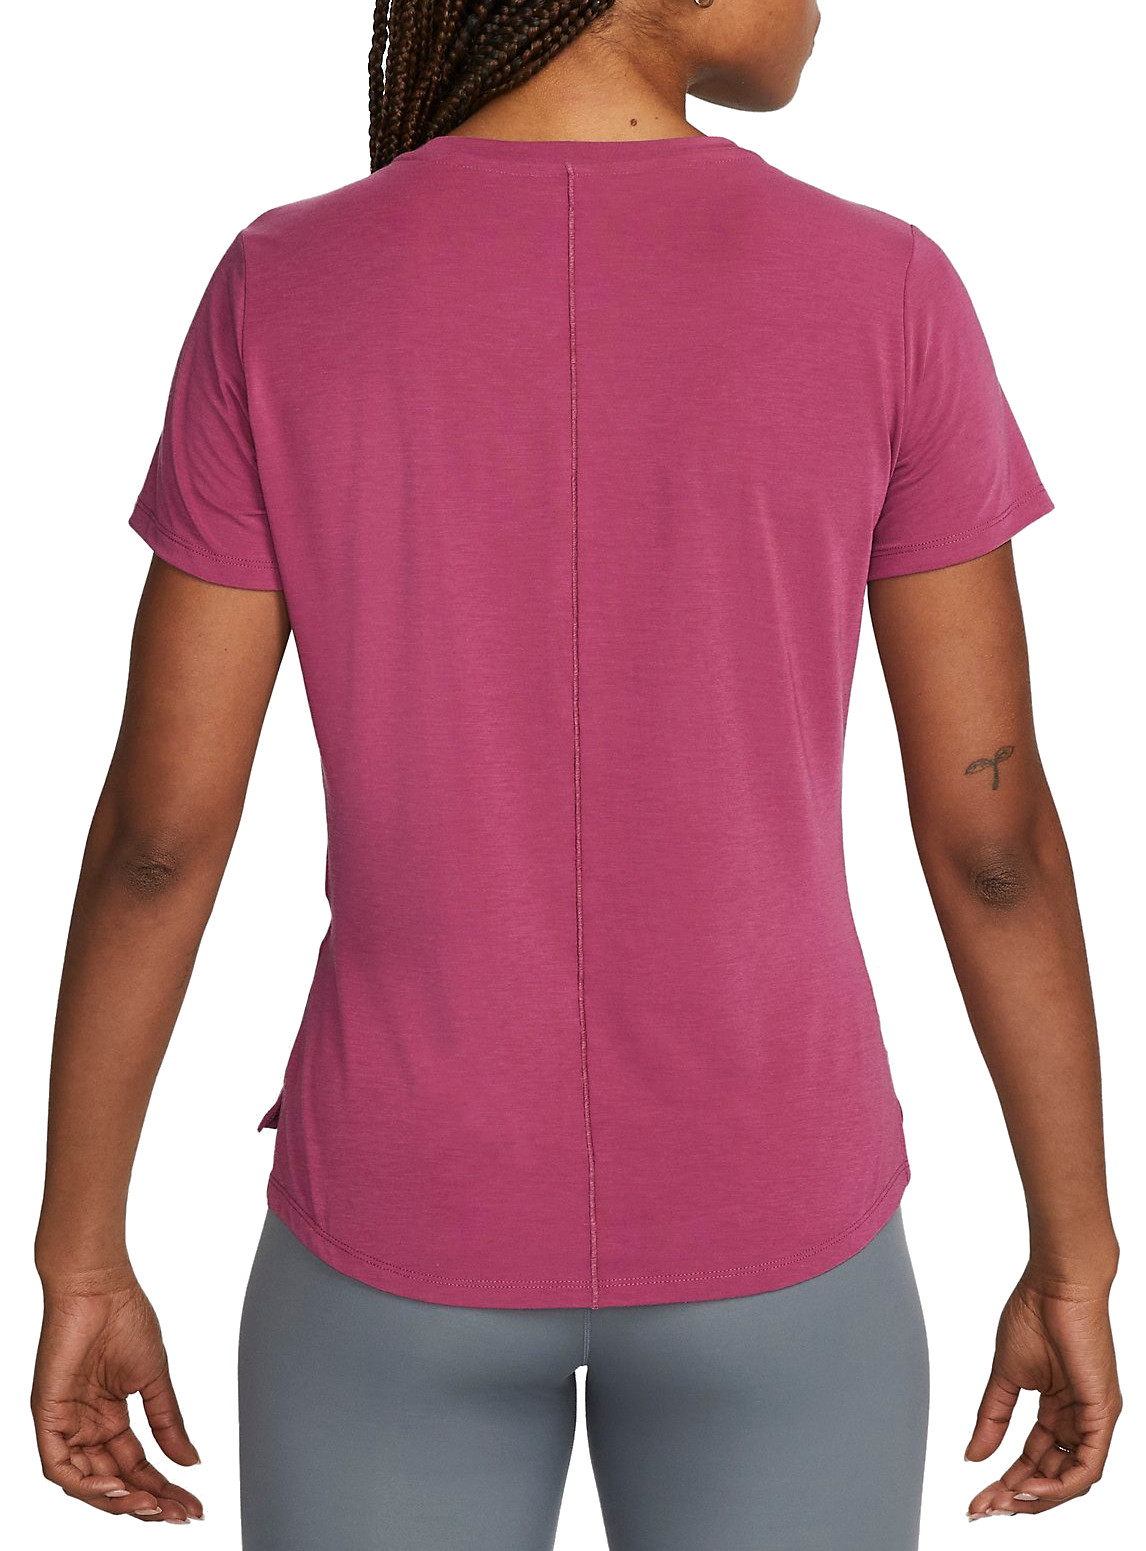 Nike Womens One Luxe Dri-Fit T-Shirt - Purple